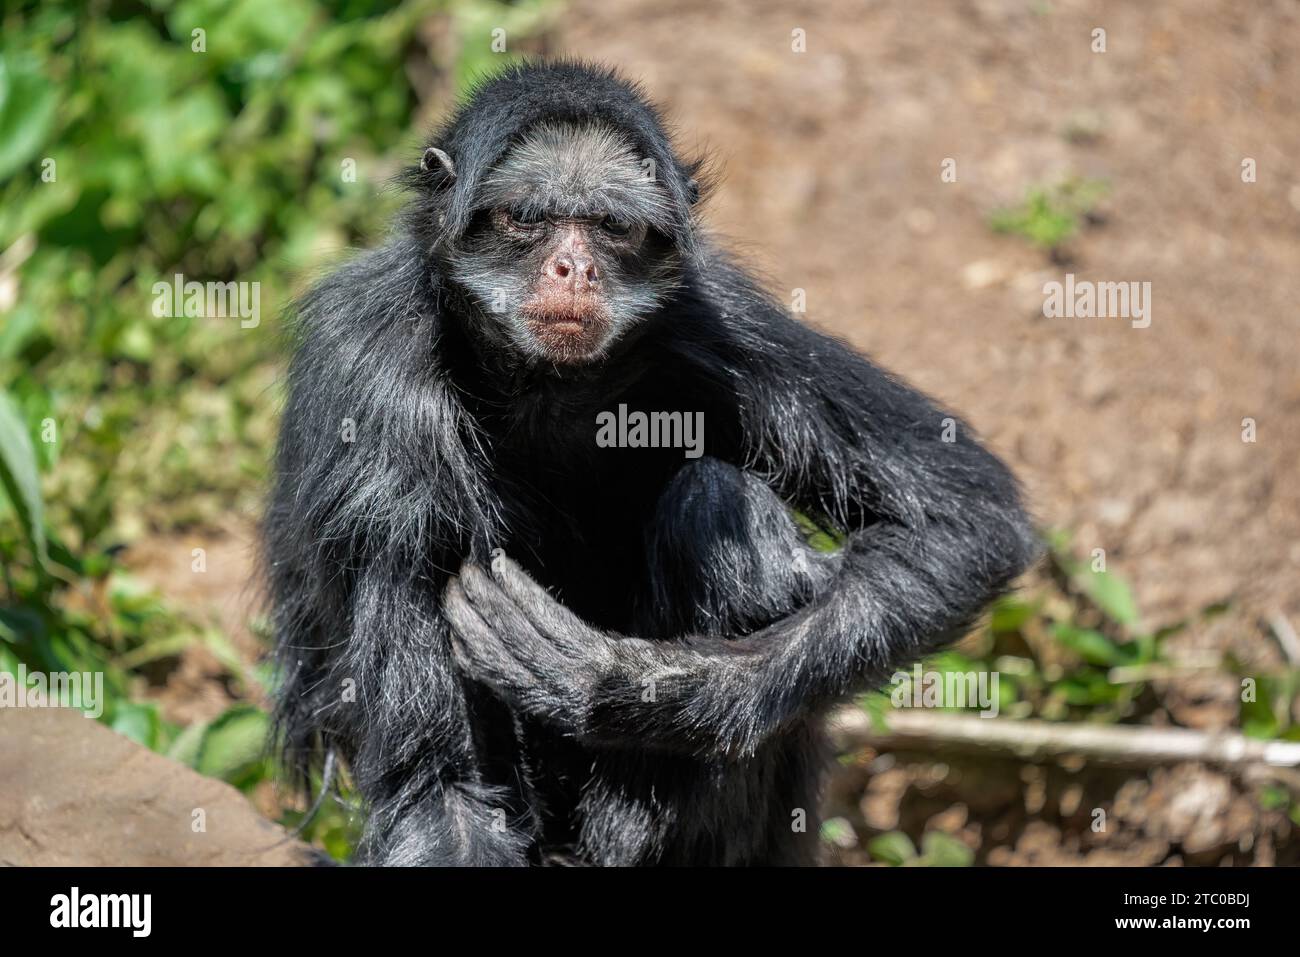 Macaco aranha de testa branca hi-res stock photography and images - Alamy